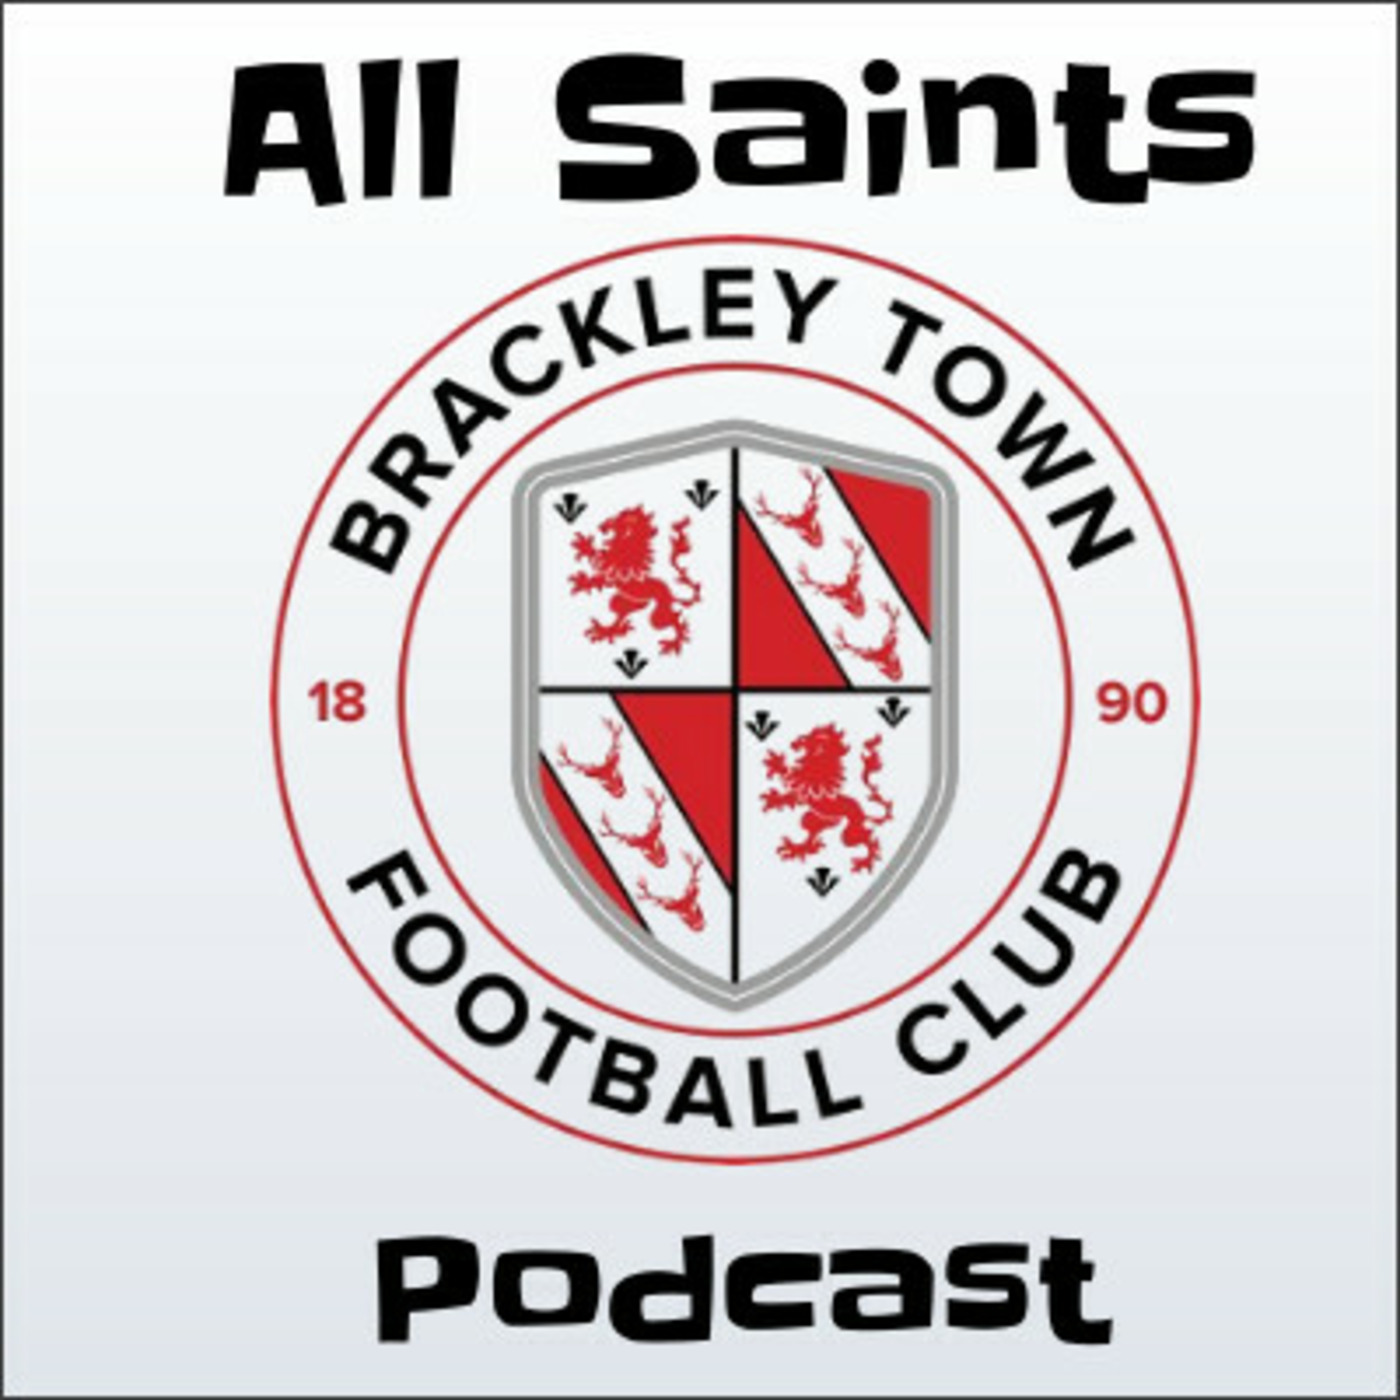 Episode 34: All saints podcast 65